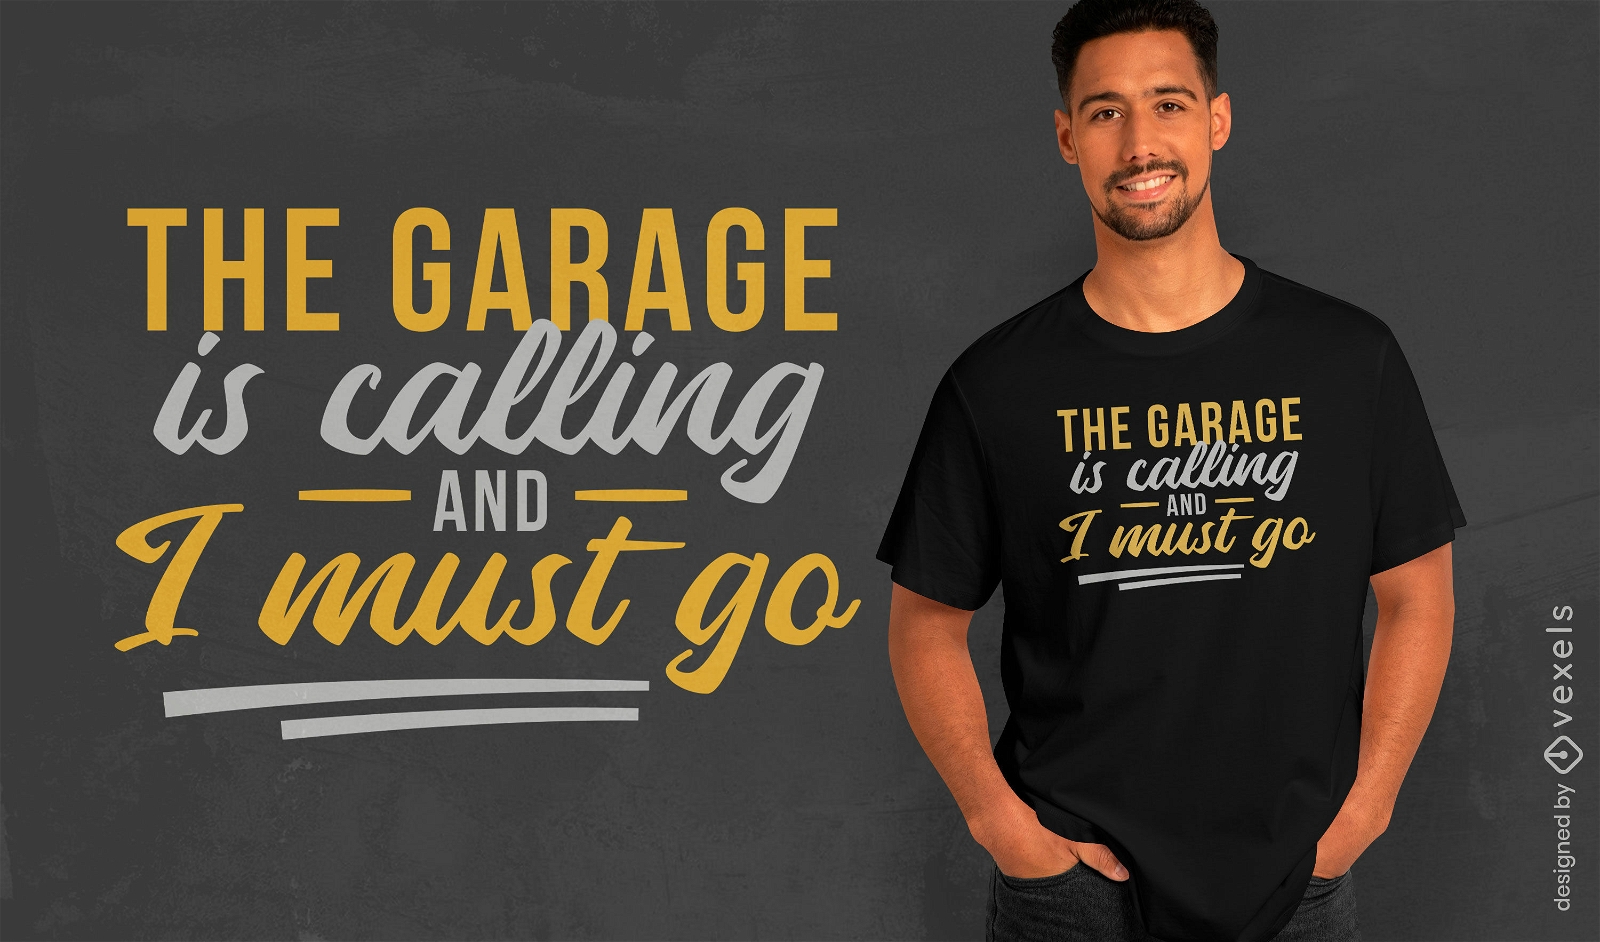 Garagen-Enthusiasten rufen T-Shirt-Design an